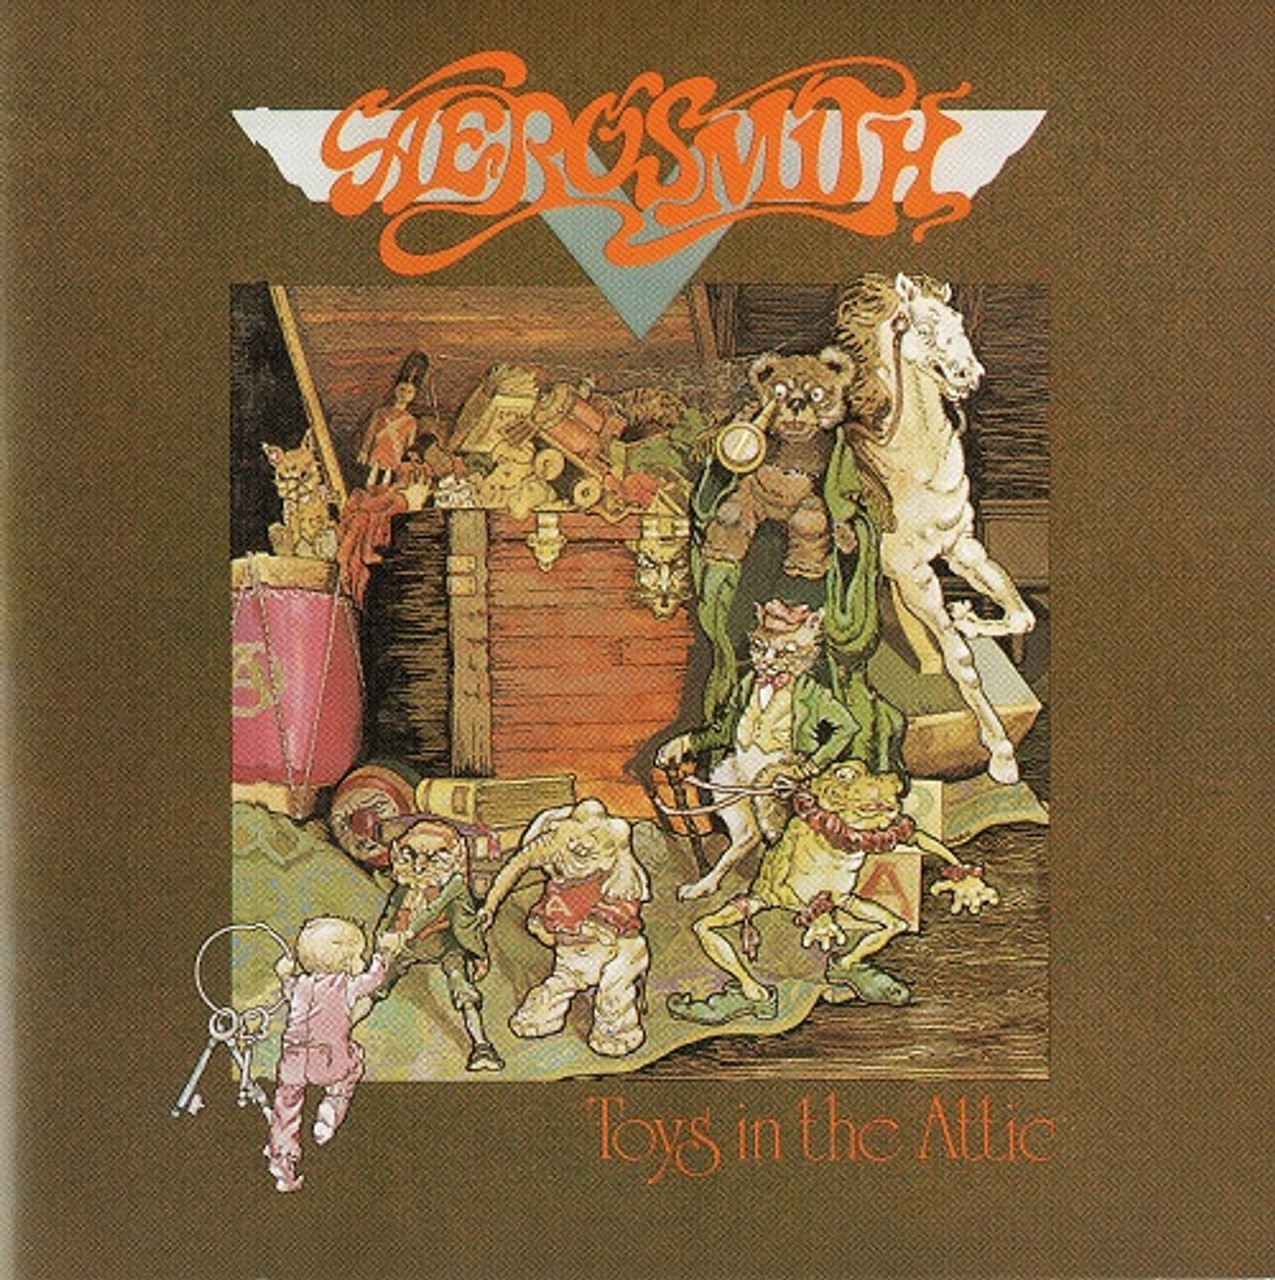 Aerosmith - Toys in the Attic: Remastered (180g Vinyl LP)